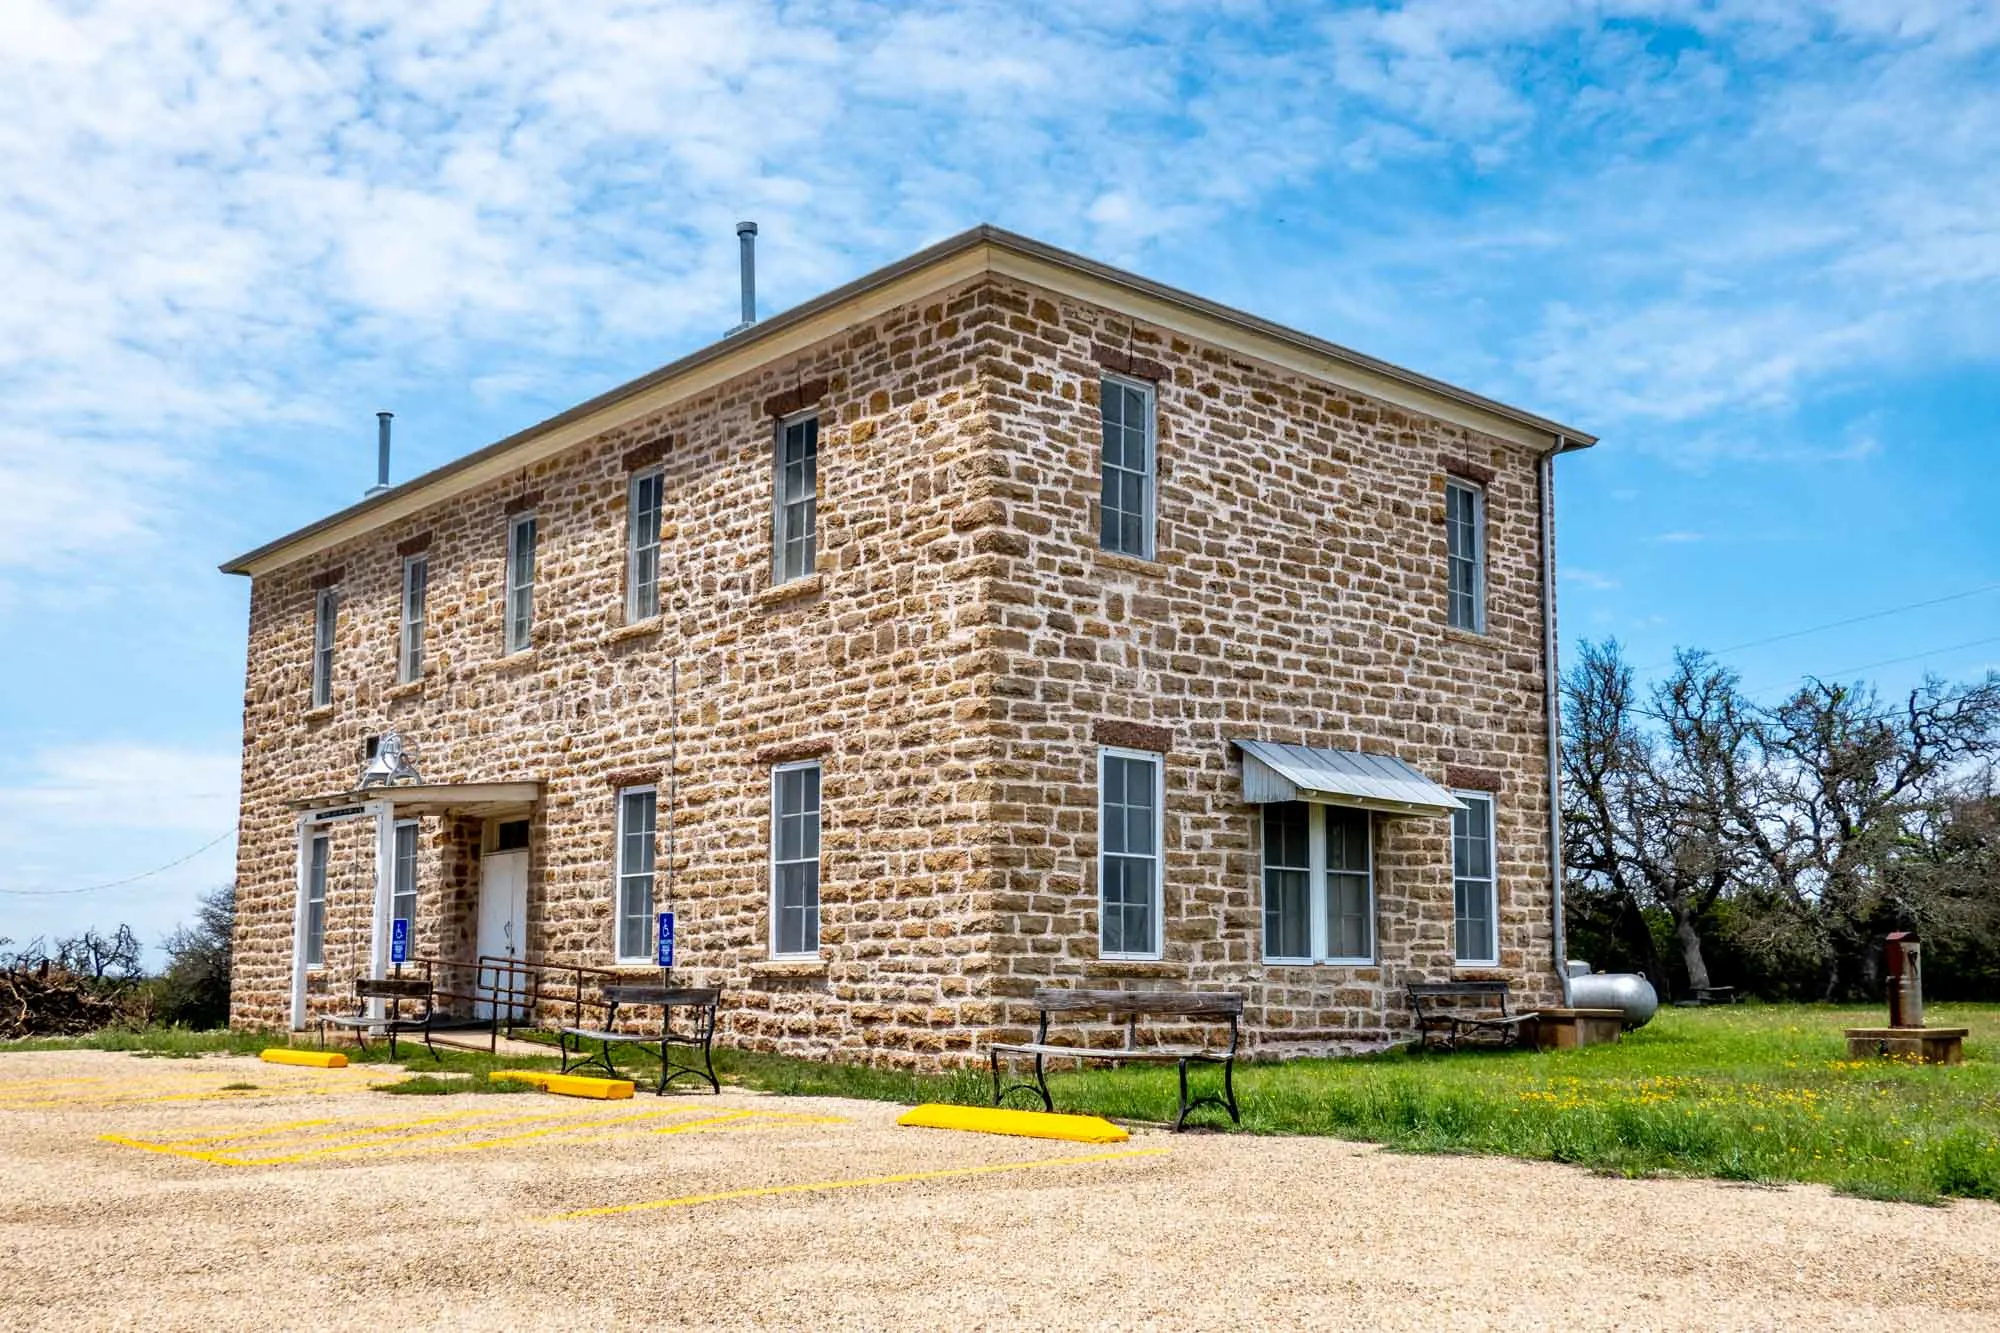 Exterior of Willow City School in Gillespie County Texas